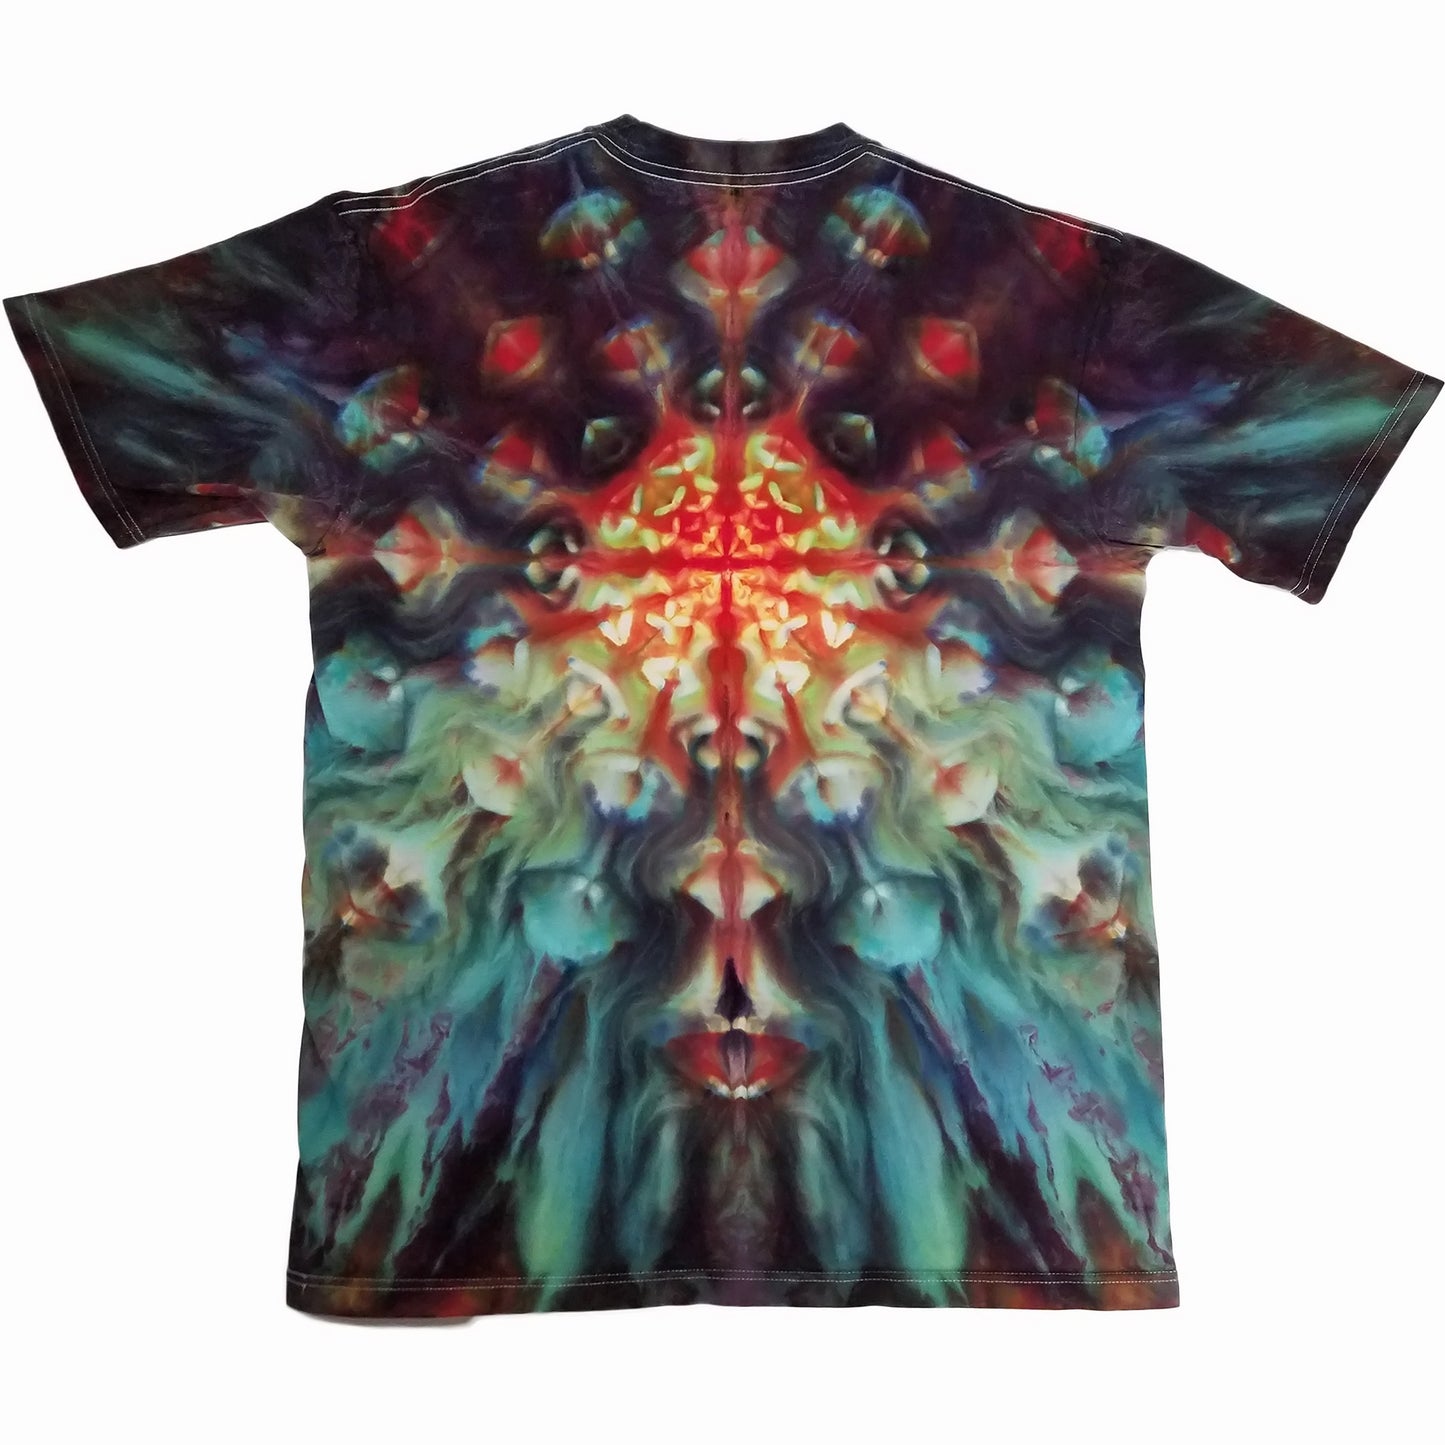 Star Portal Dyed Shirt XL